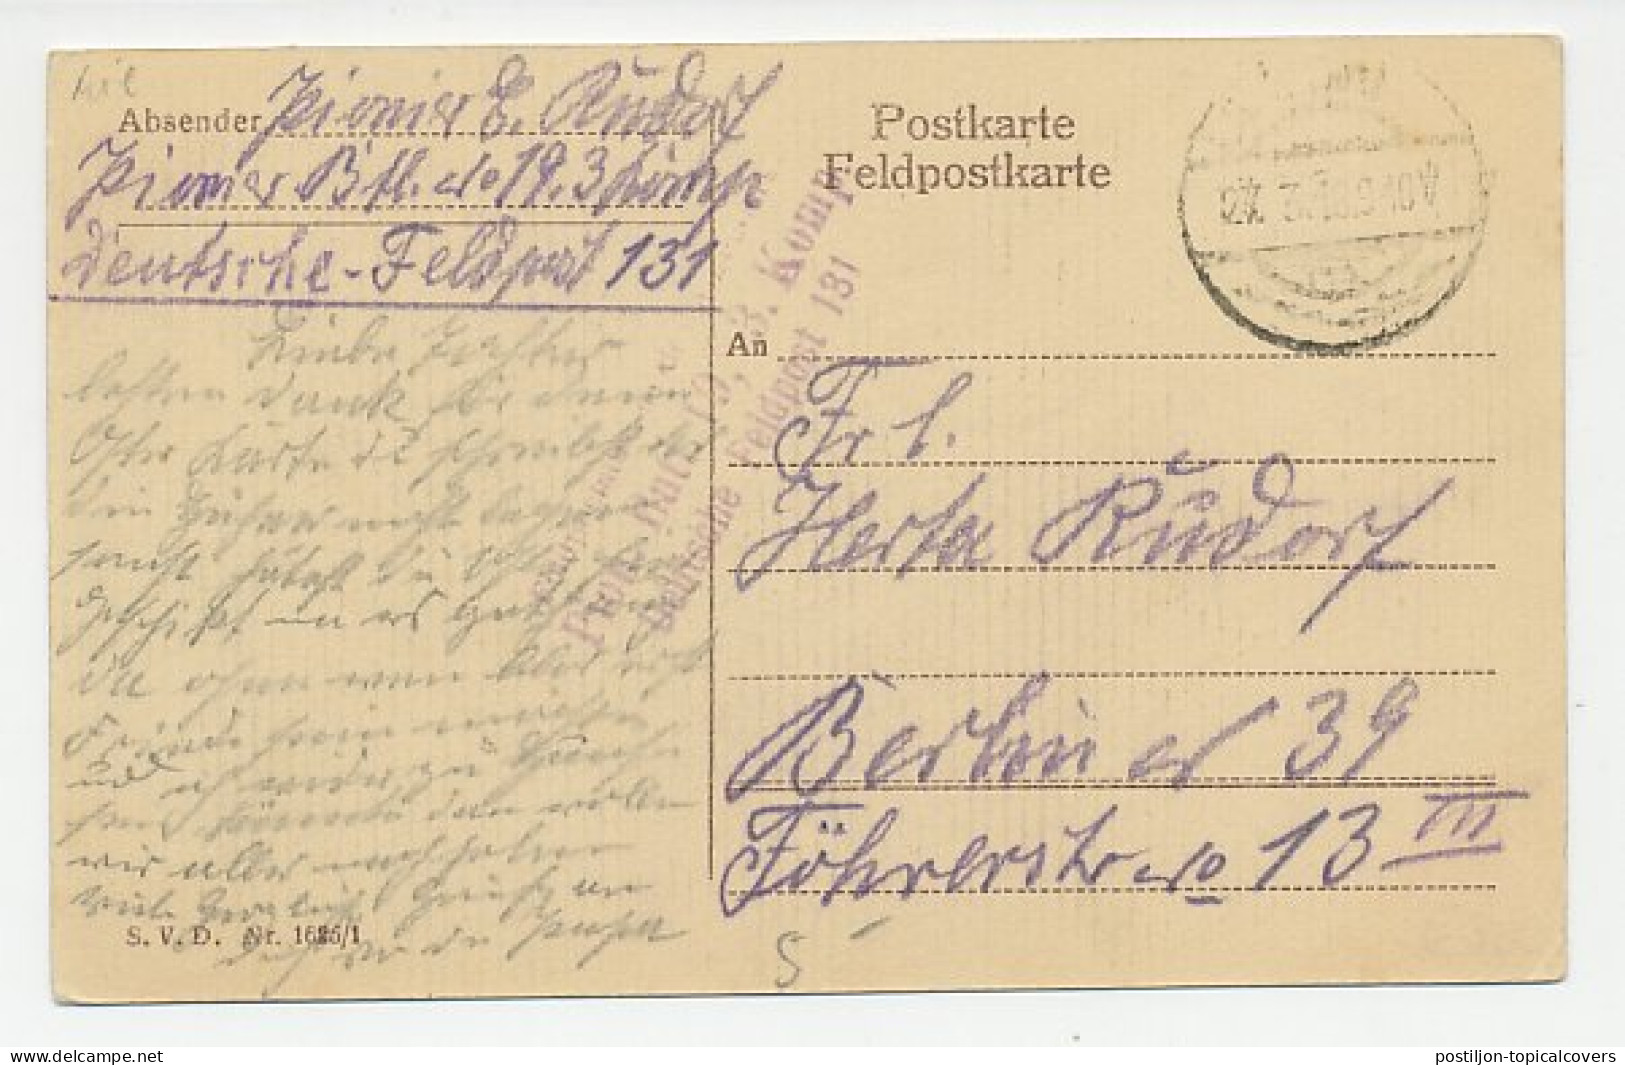 Fieldpost Postcard Germany 1918 Military Clothing Depot - WWI - WW1 (I Guerra Mundial)